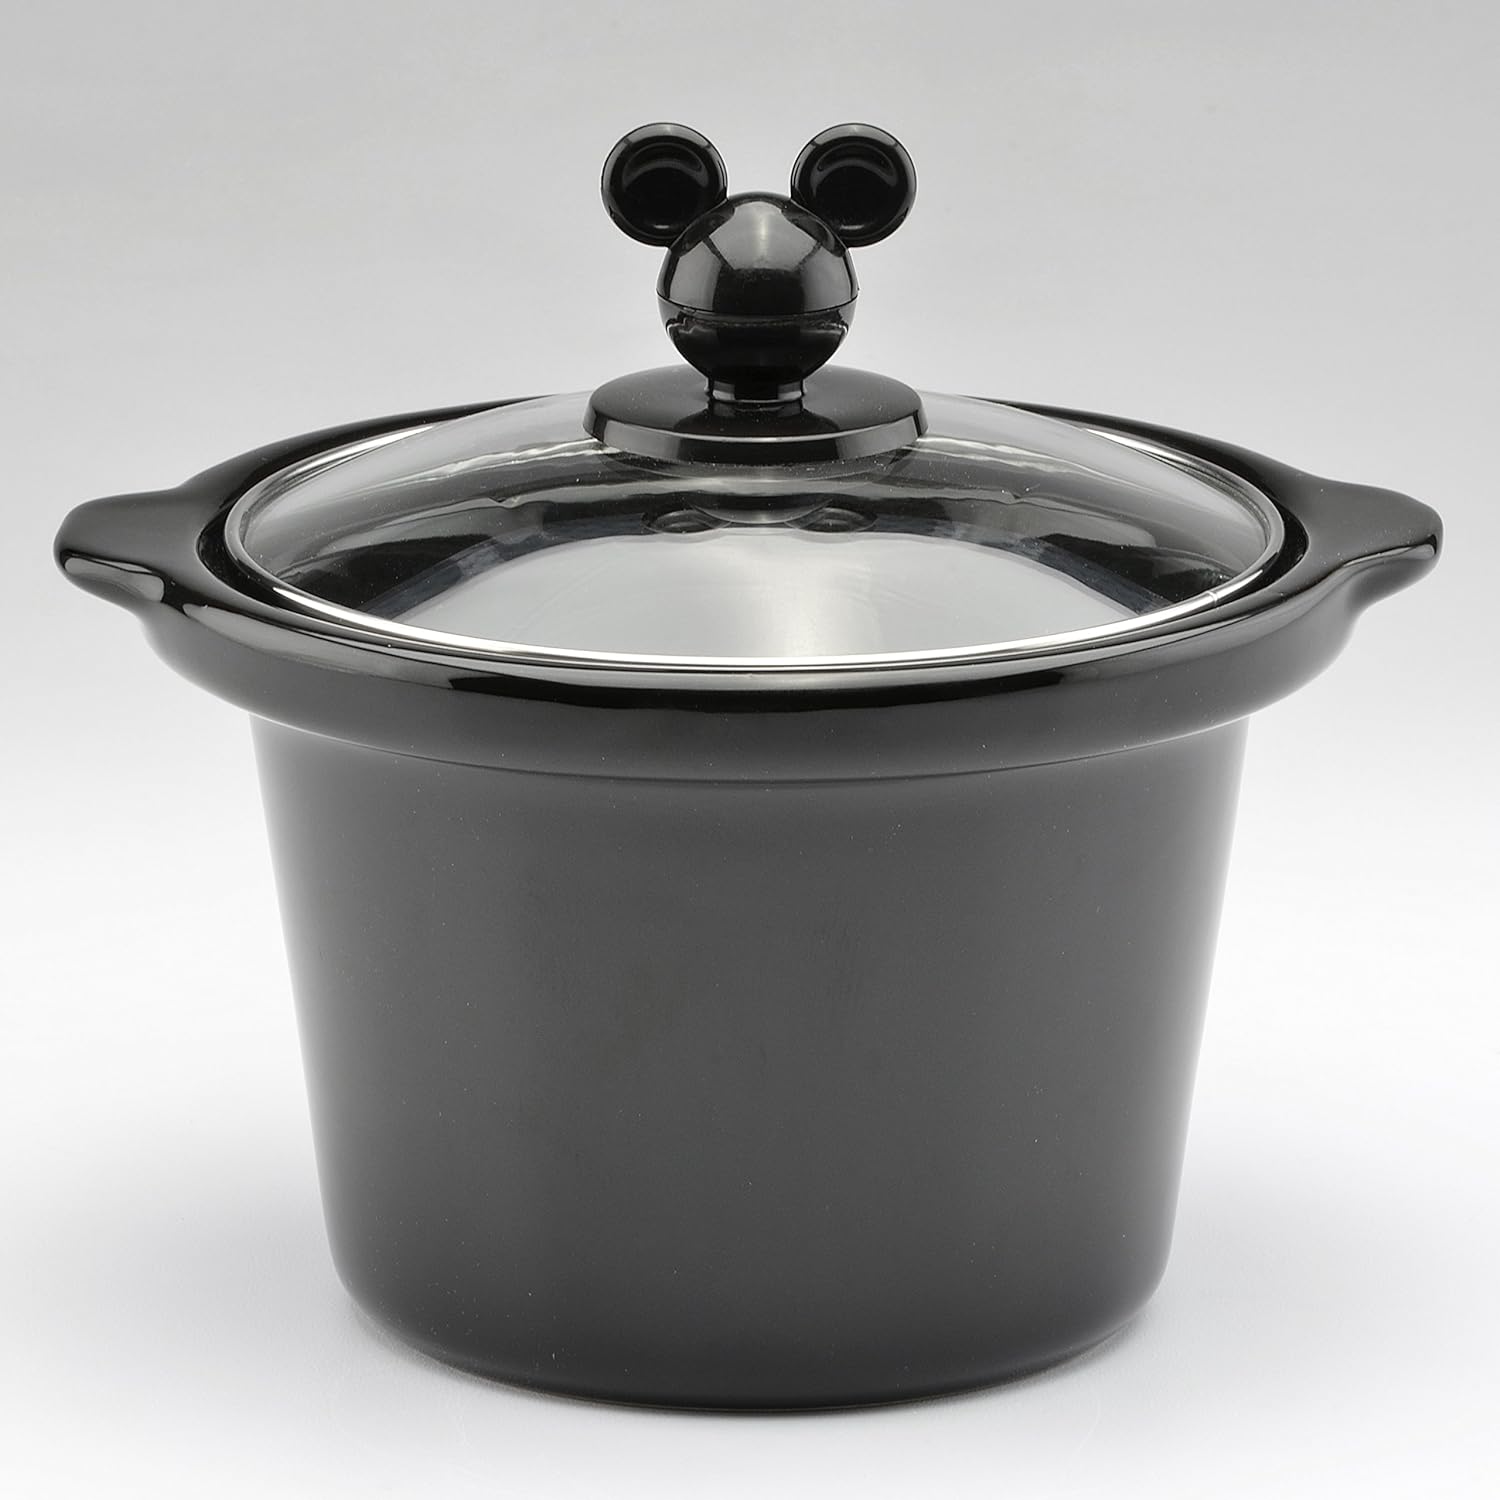 Disney DCM-200CN Mickey Mouse Slow Cooker, 2-Quart, Red/Black